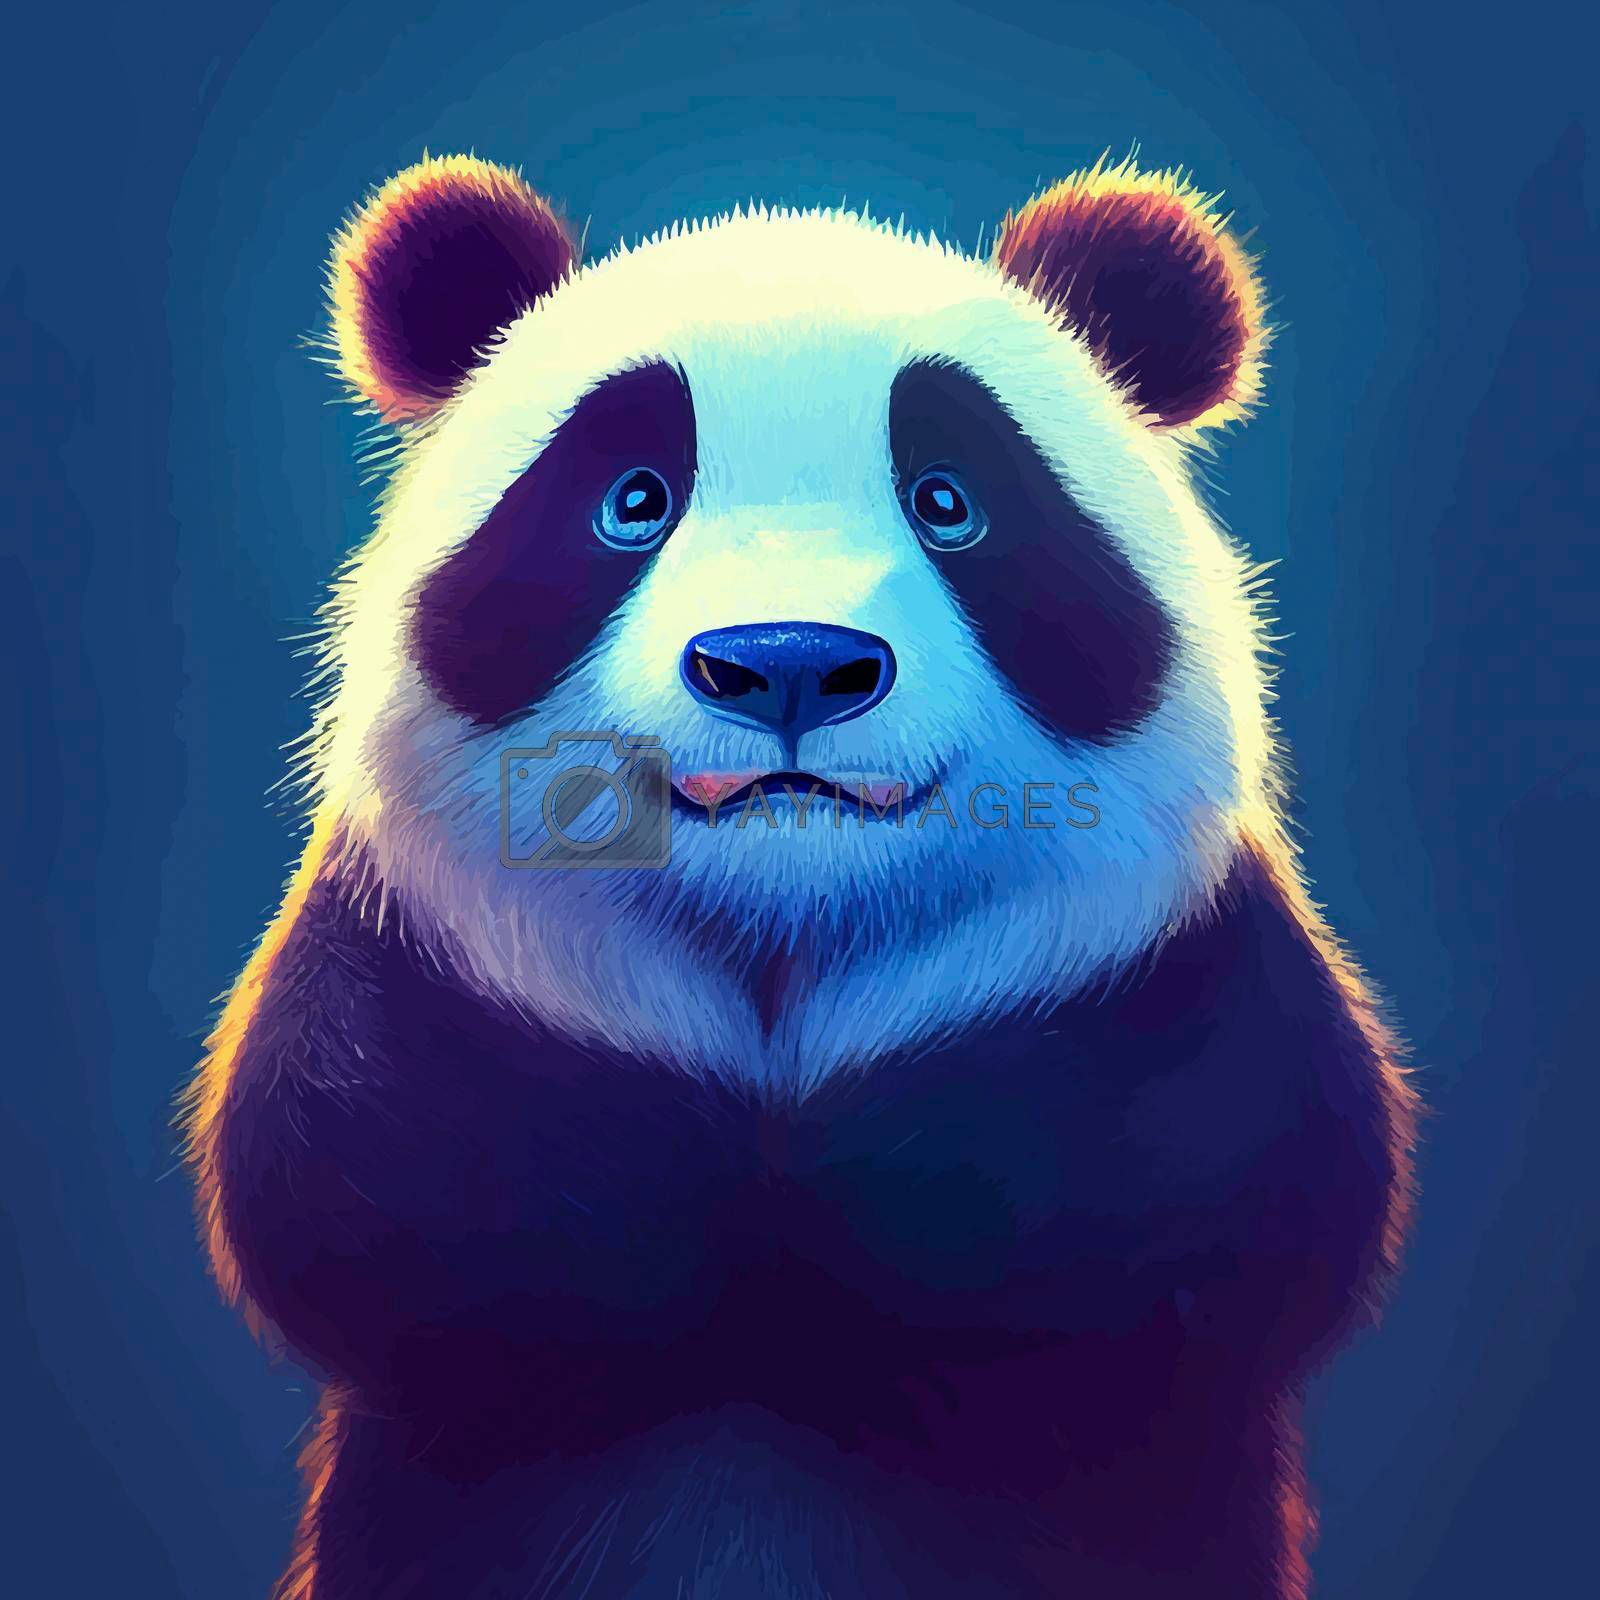 Royalty free image of animated illustration of a cute panda, animated baby panda portrait by JpRamos